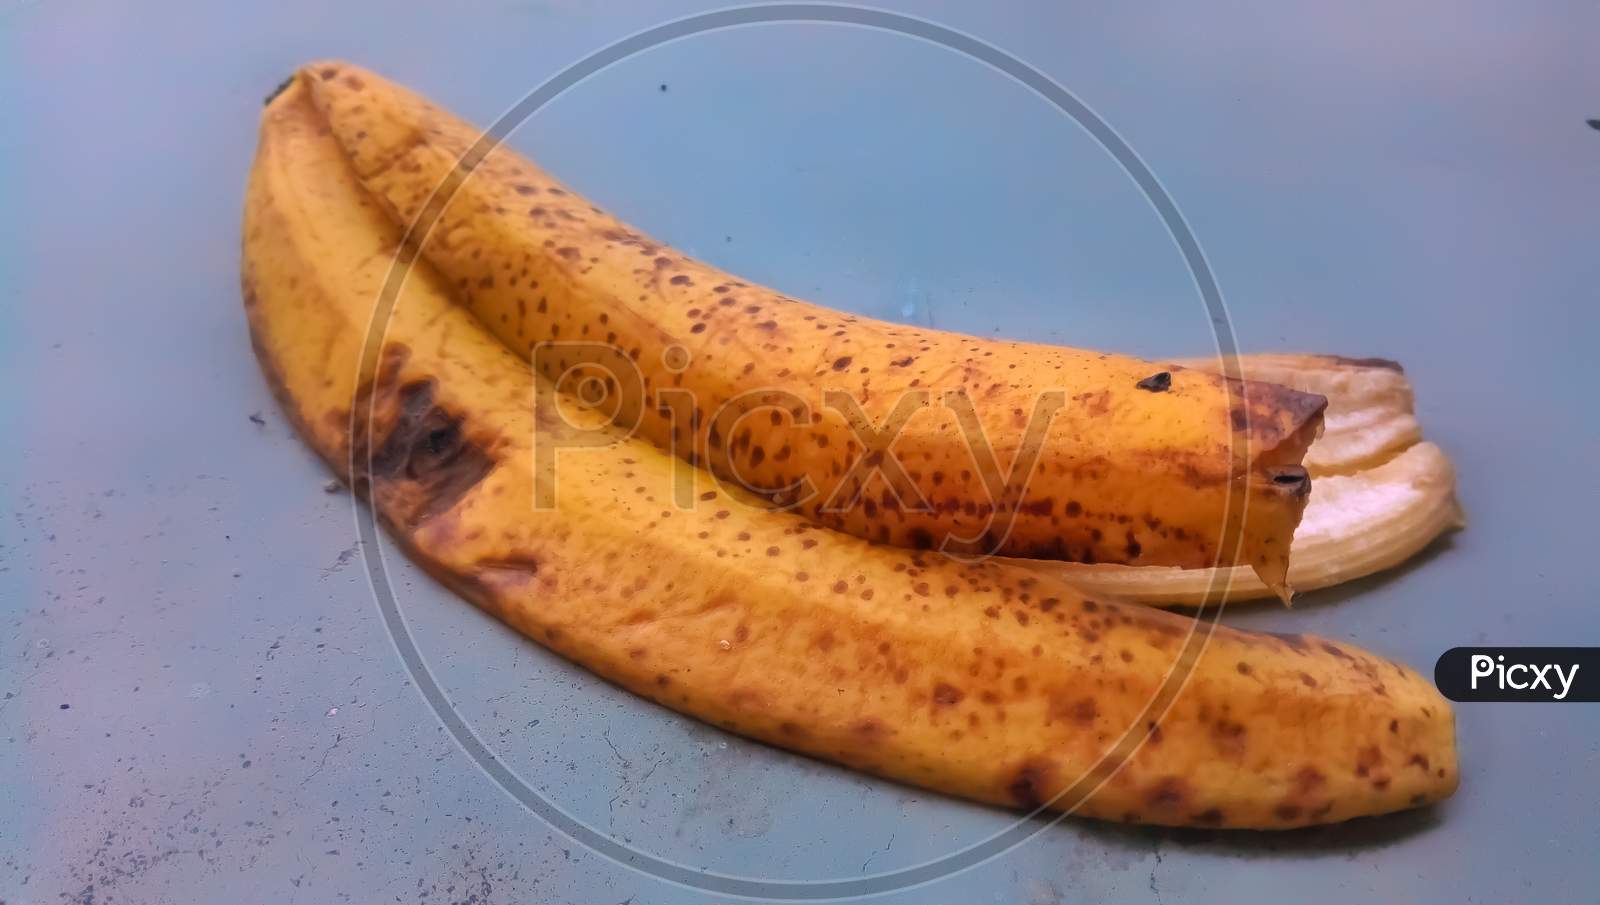 Banana peel picture yellow